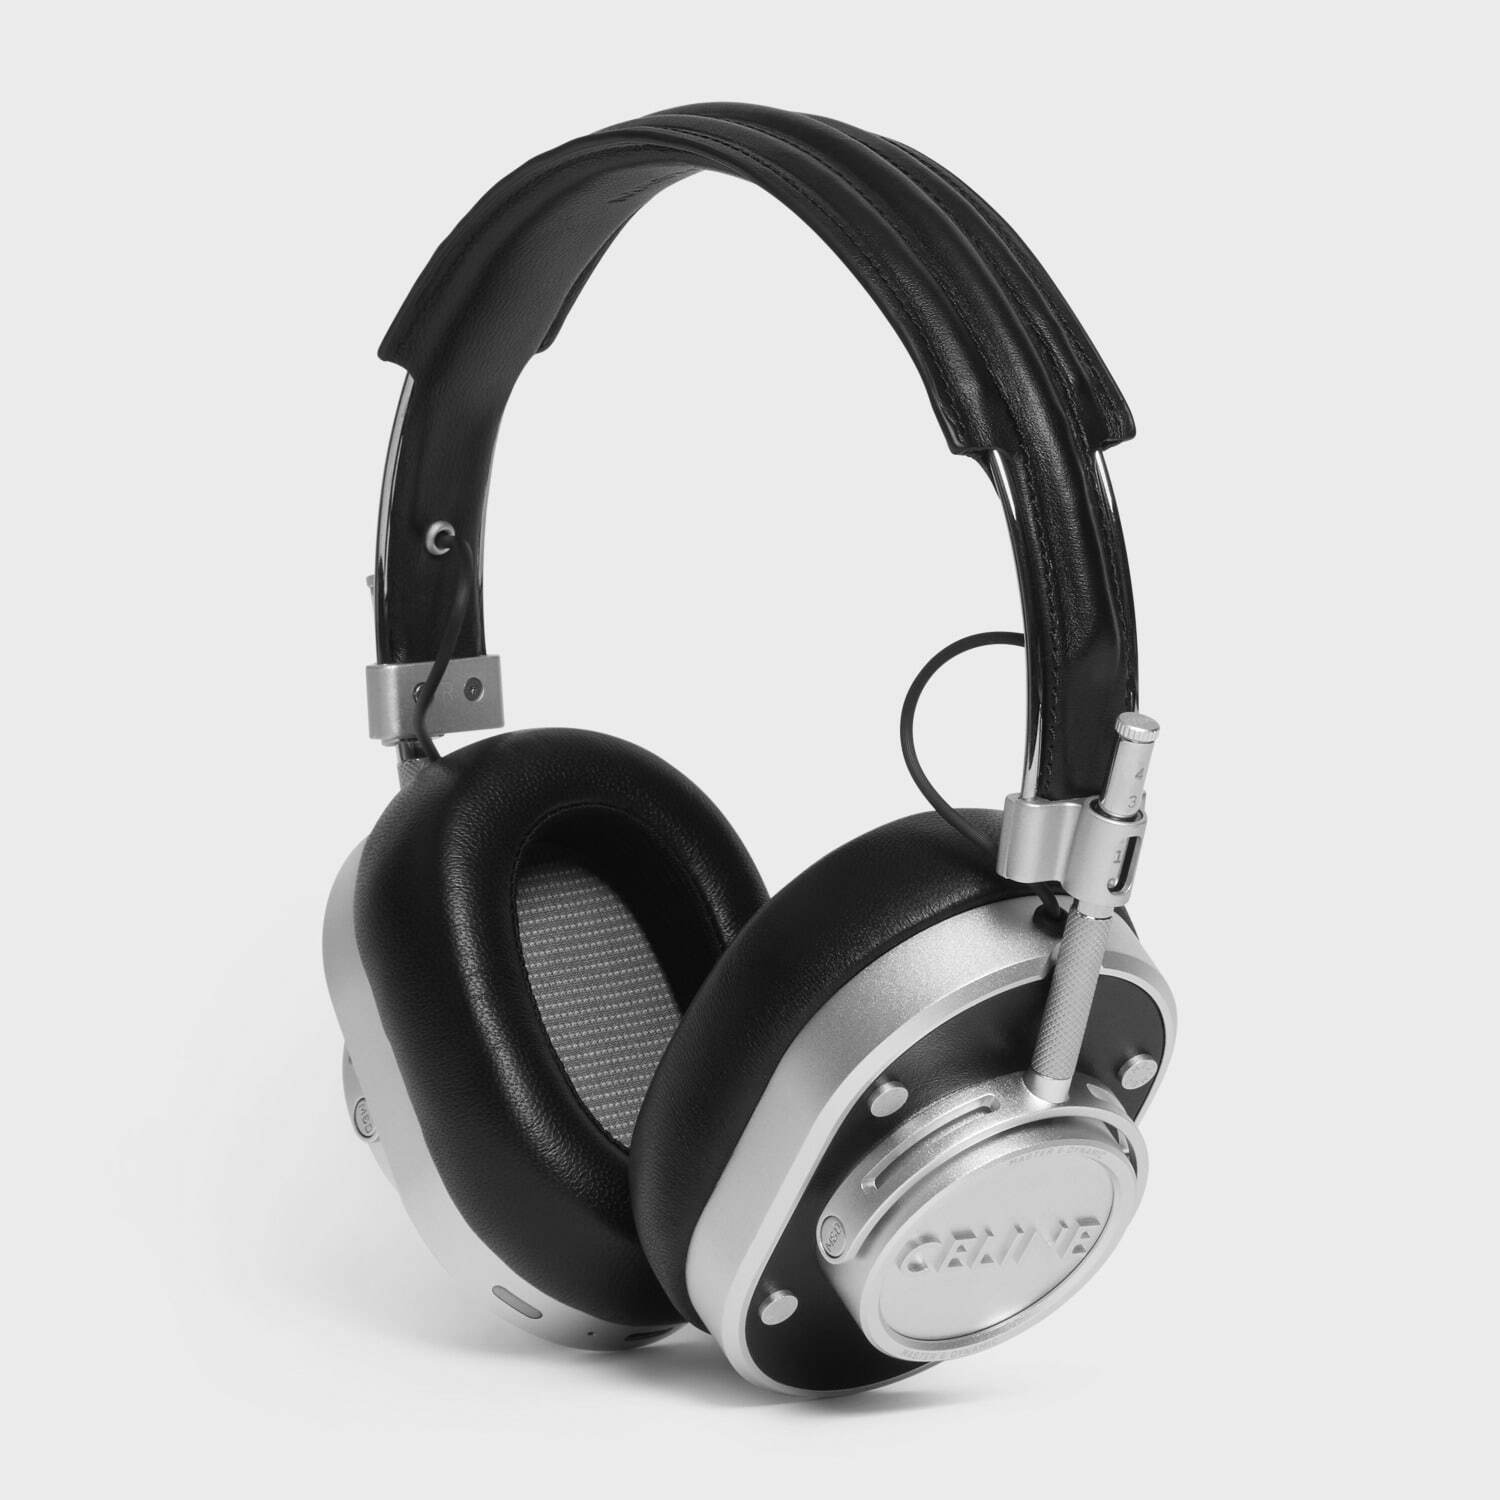 CELINE's Master & Dynamics headphones collab